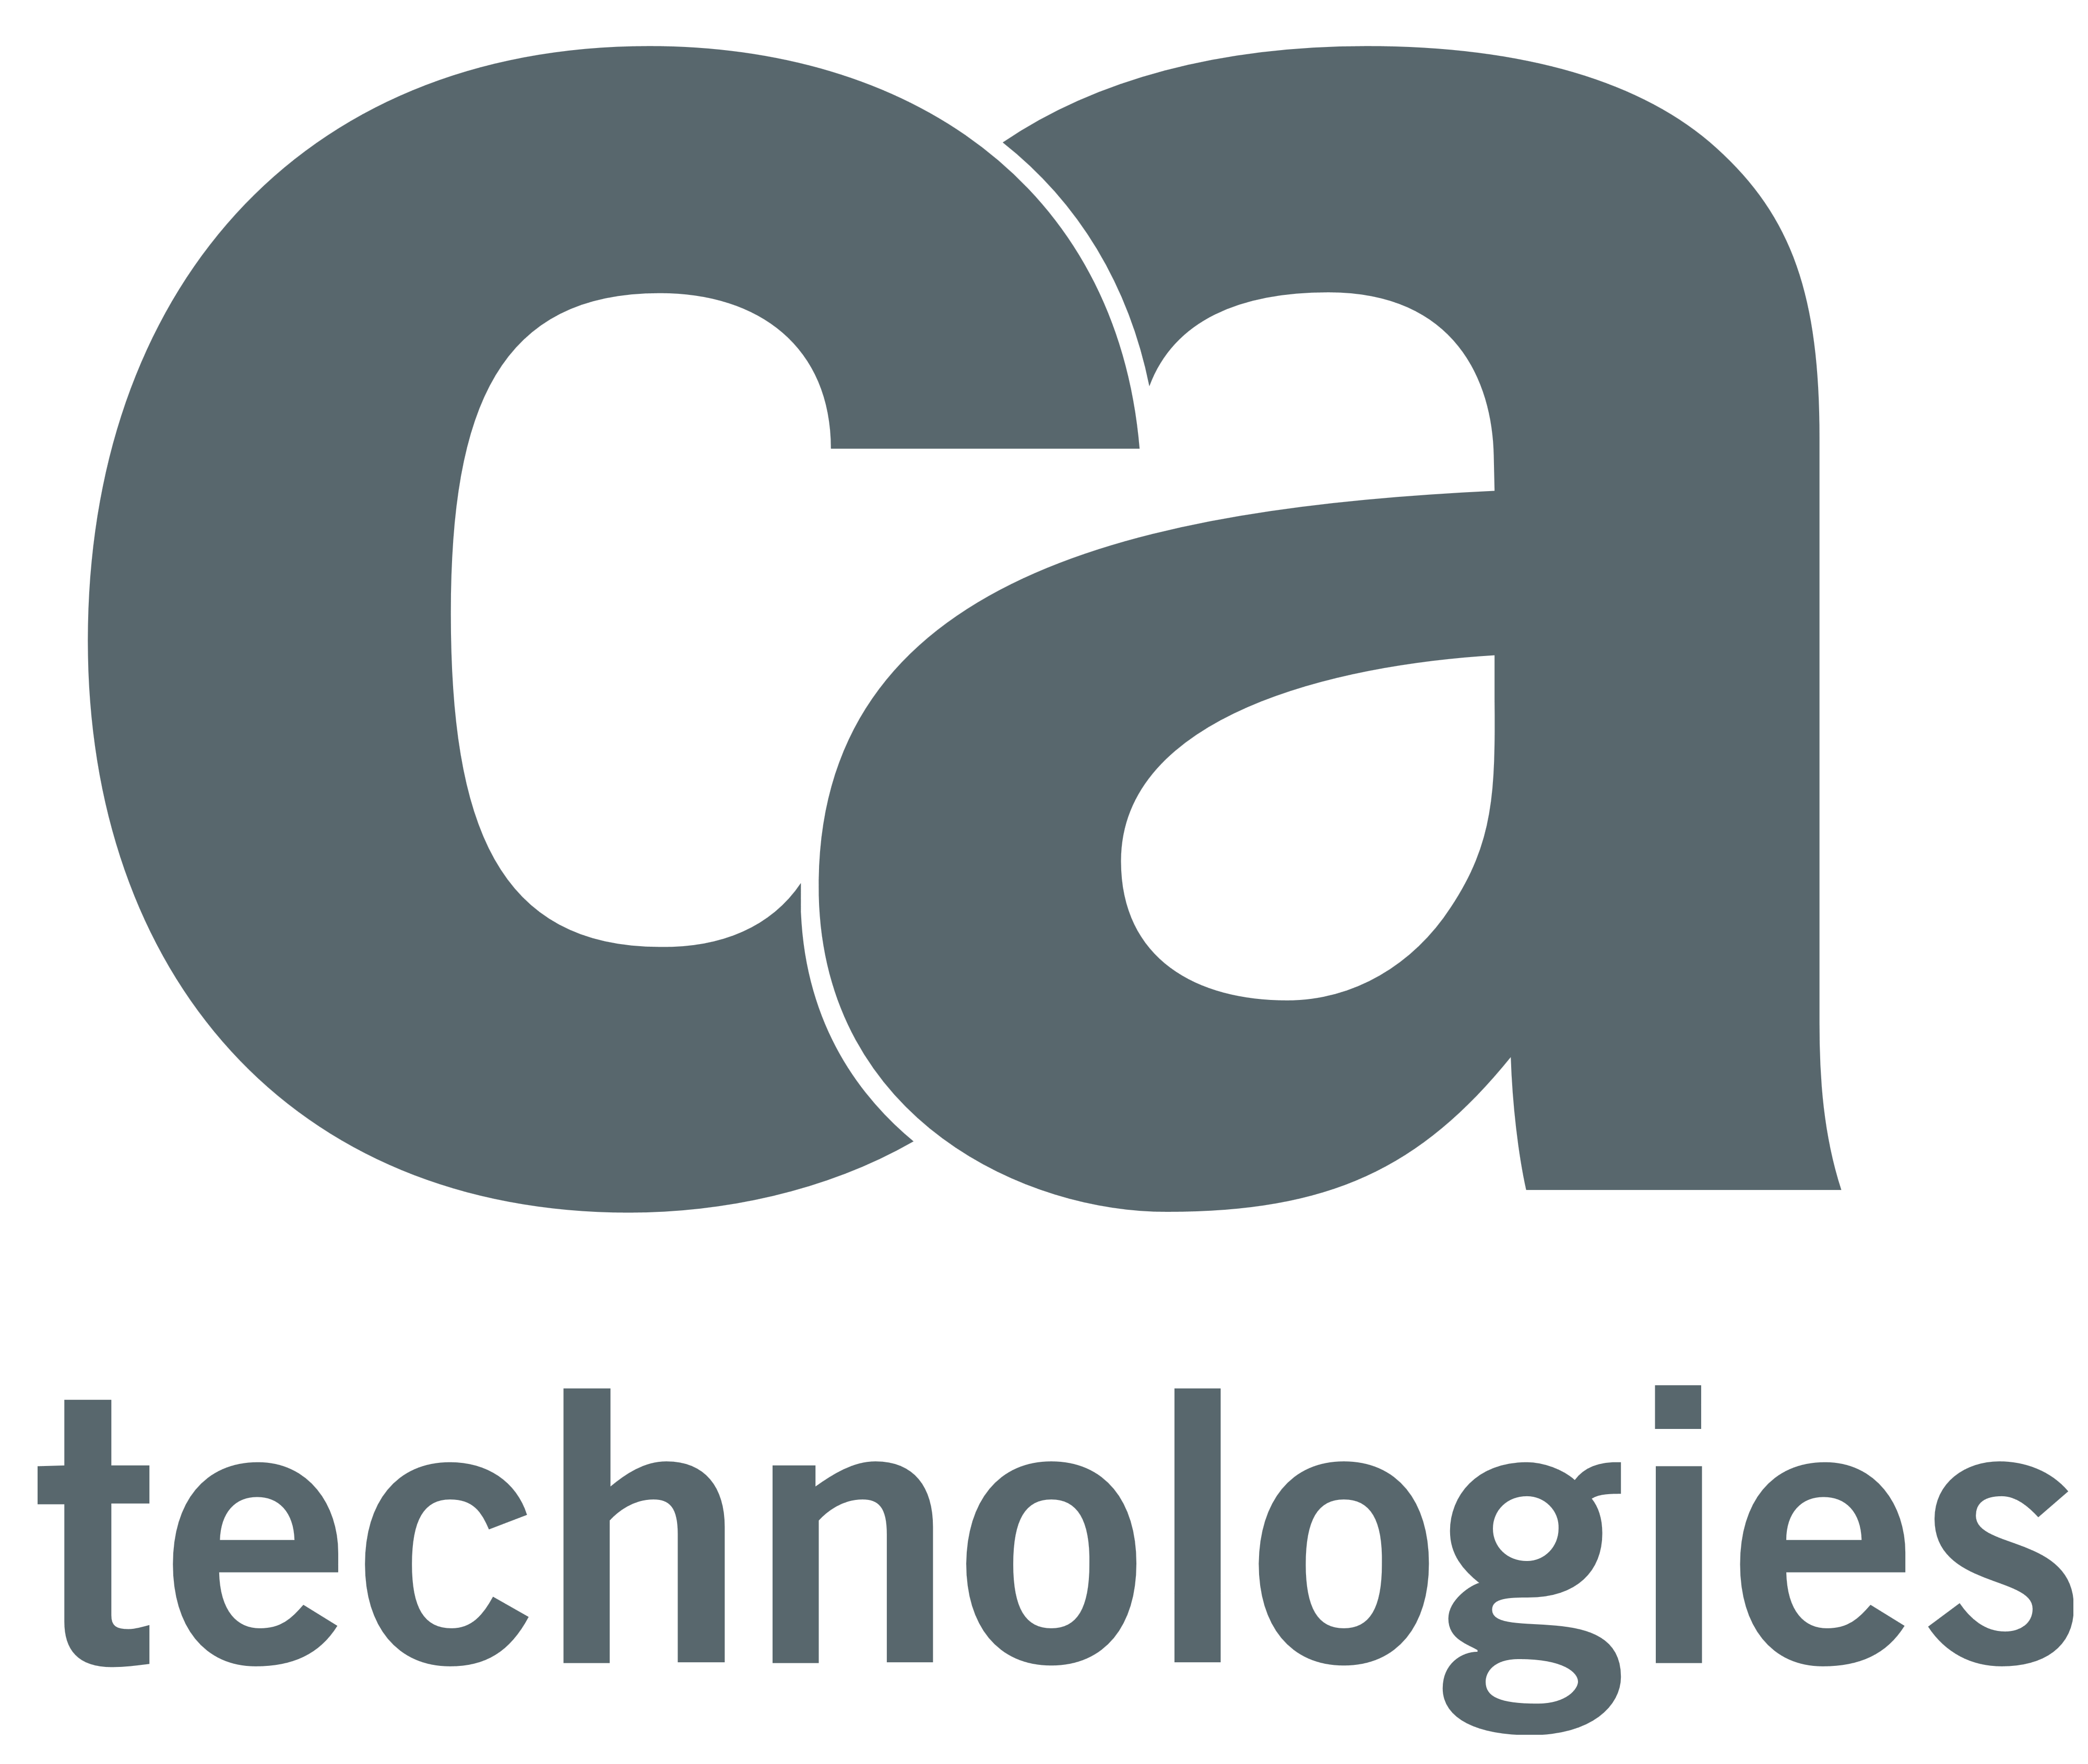 CA Technologies logo, logotype